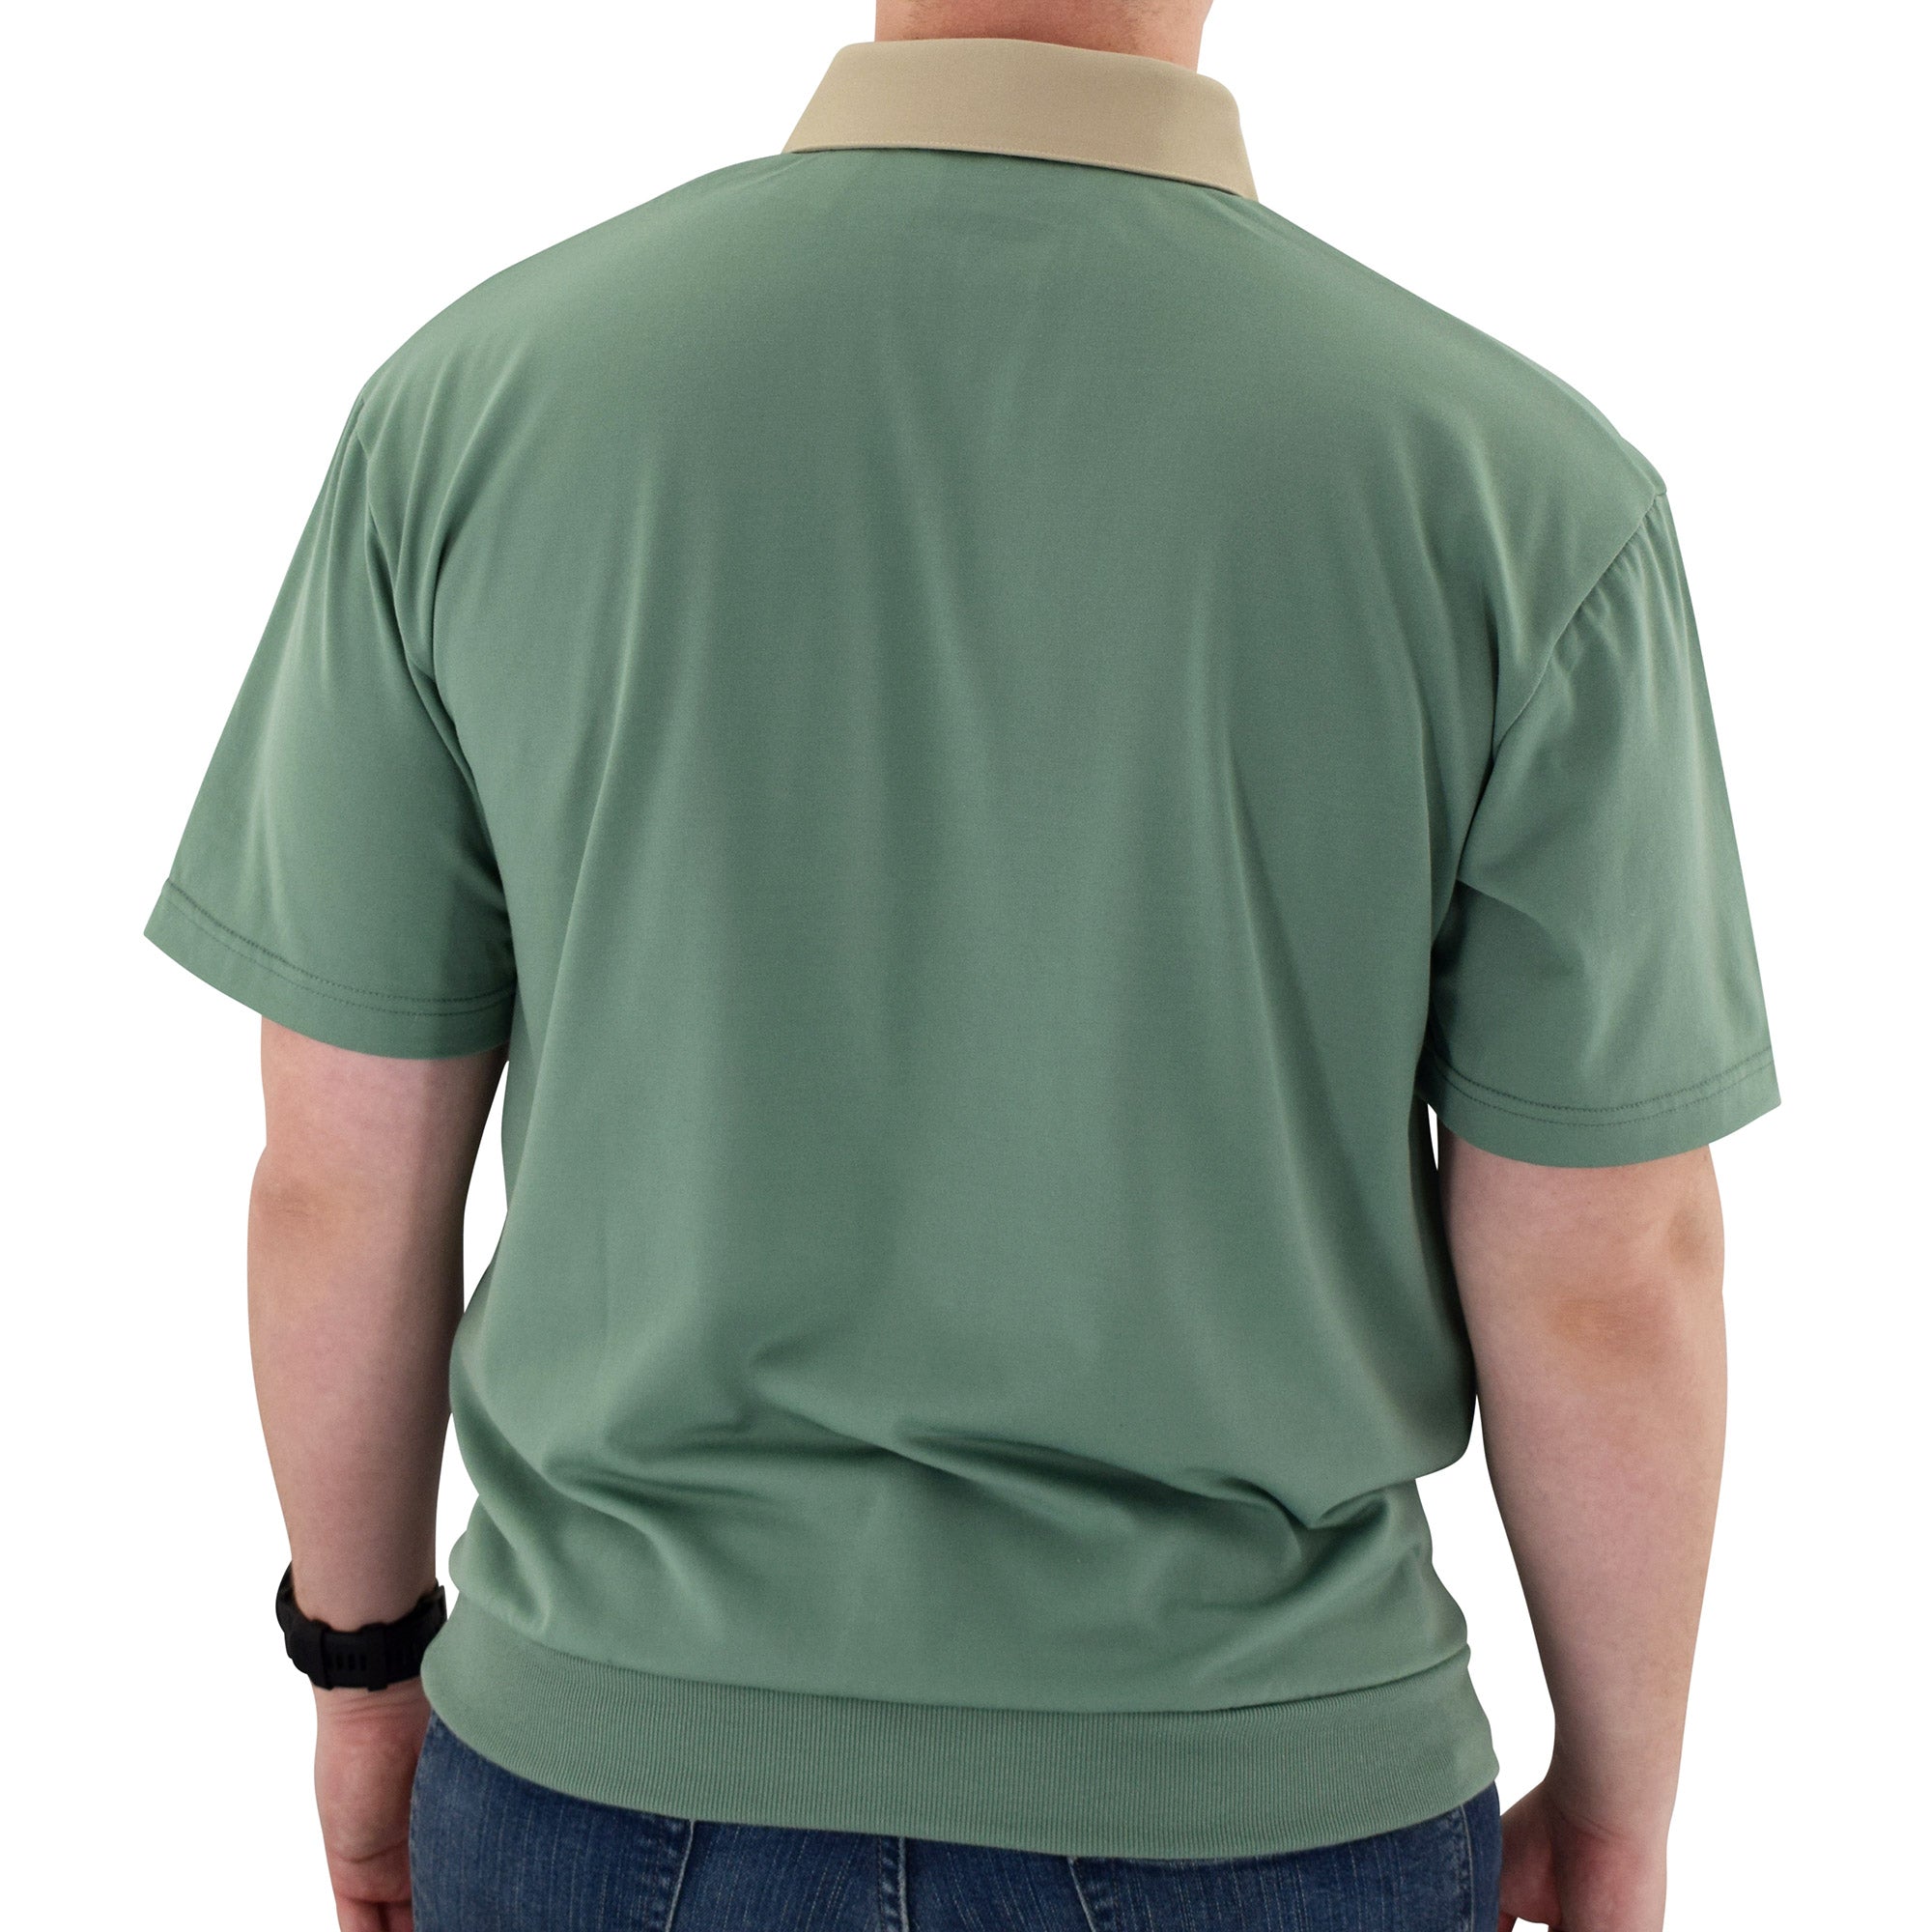 Classics by Palmland Horizontal Short Sleeve Banded Bottom Shirt Sage - 6010-BL12 - theflagshirt